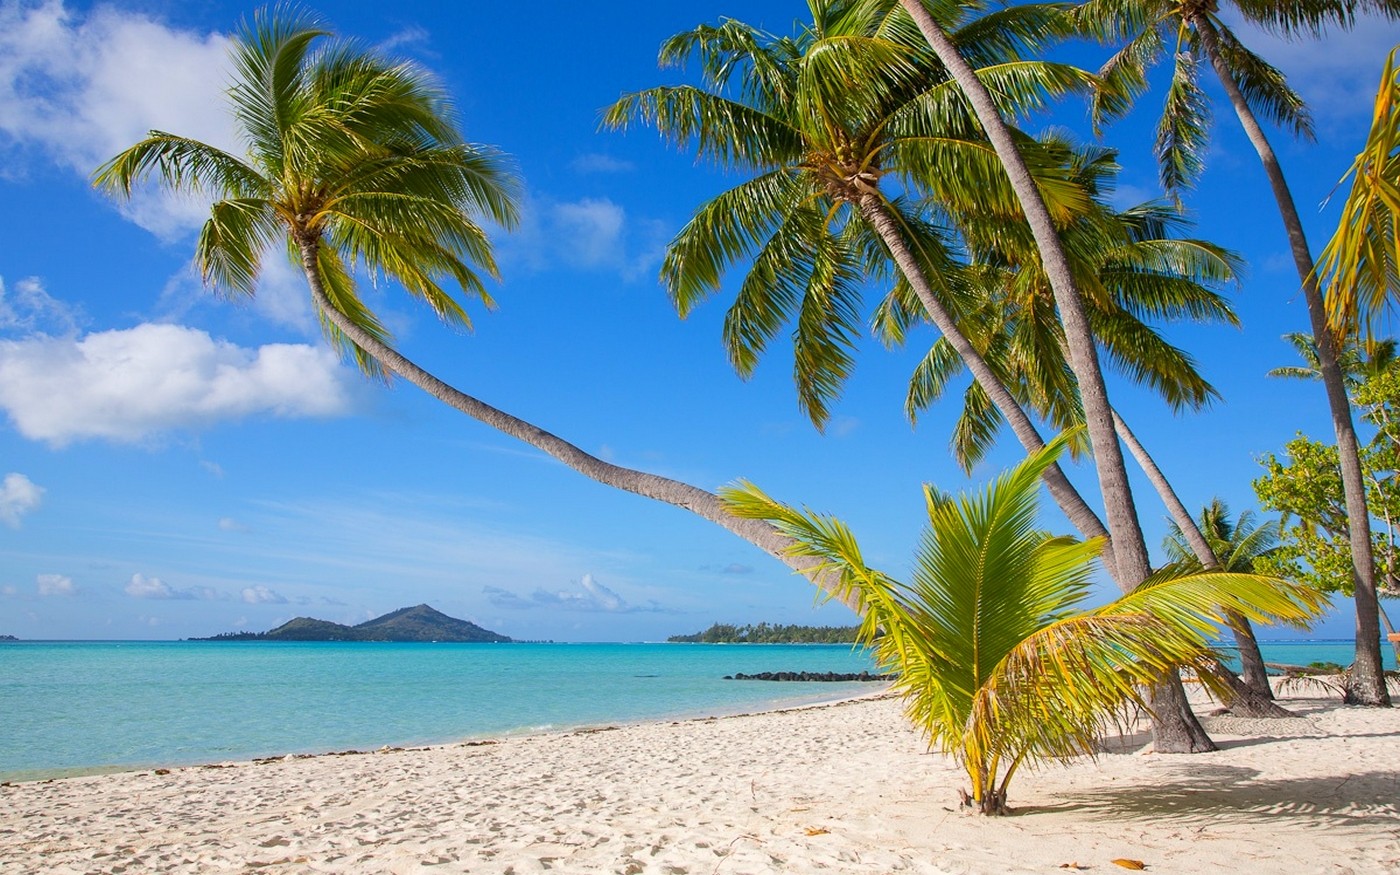 General 1400x875 nature tropical Bora Bora beach island white sand sea palm trees summer French Polynesia